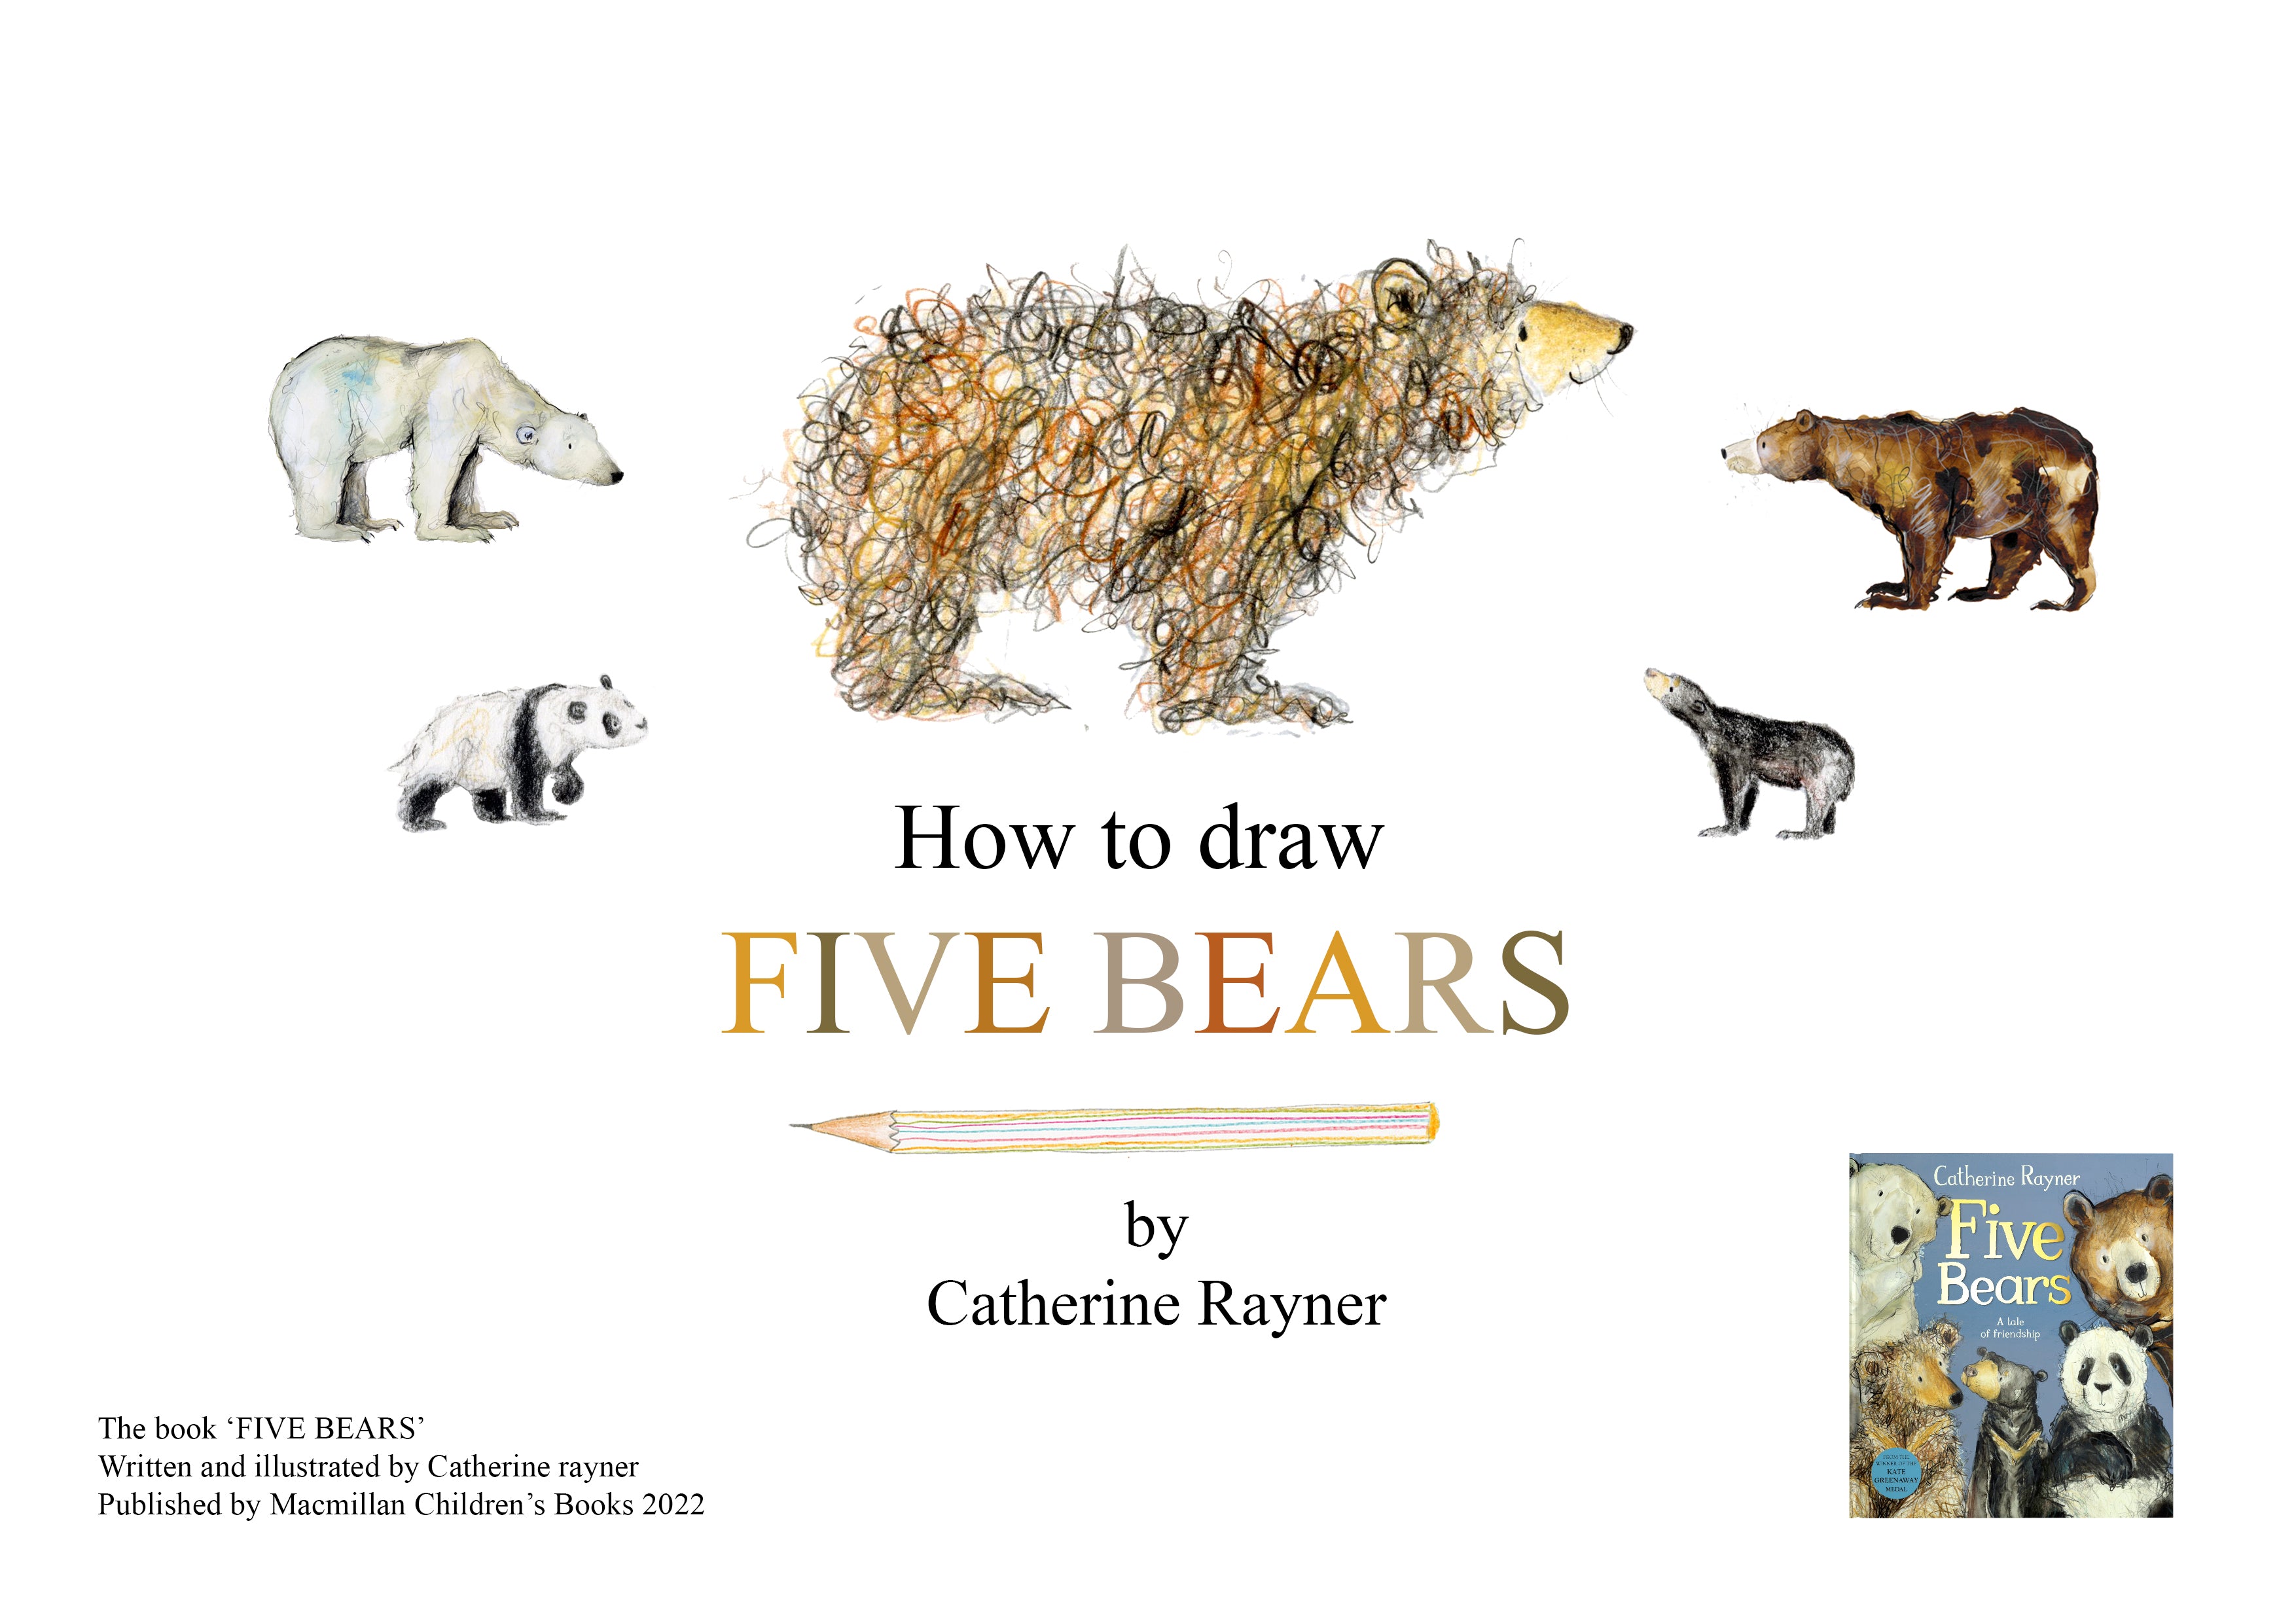 Catherine Rayner - How to Draw 5 Bears